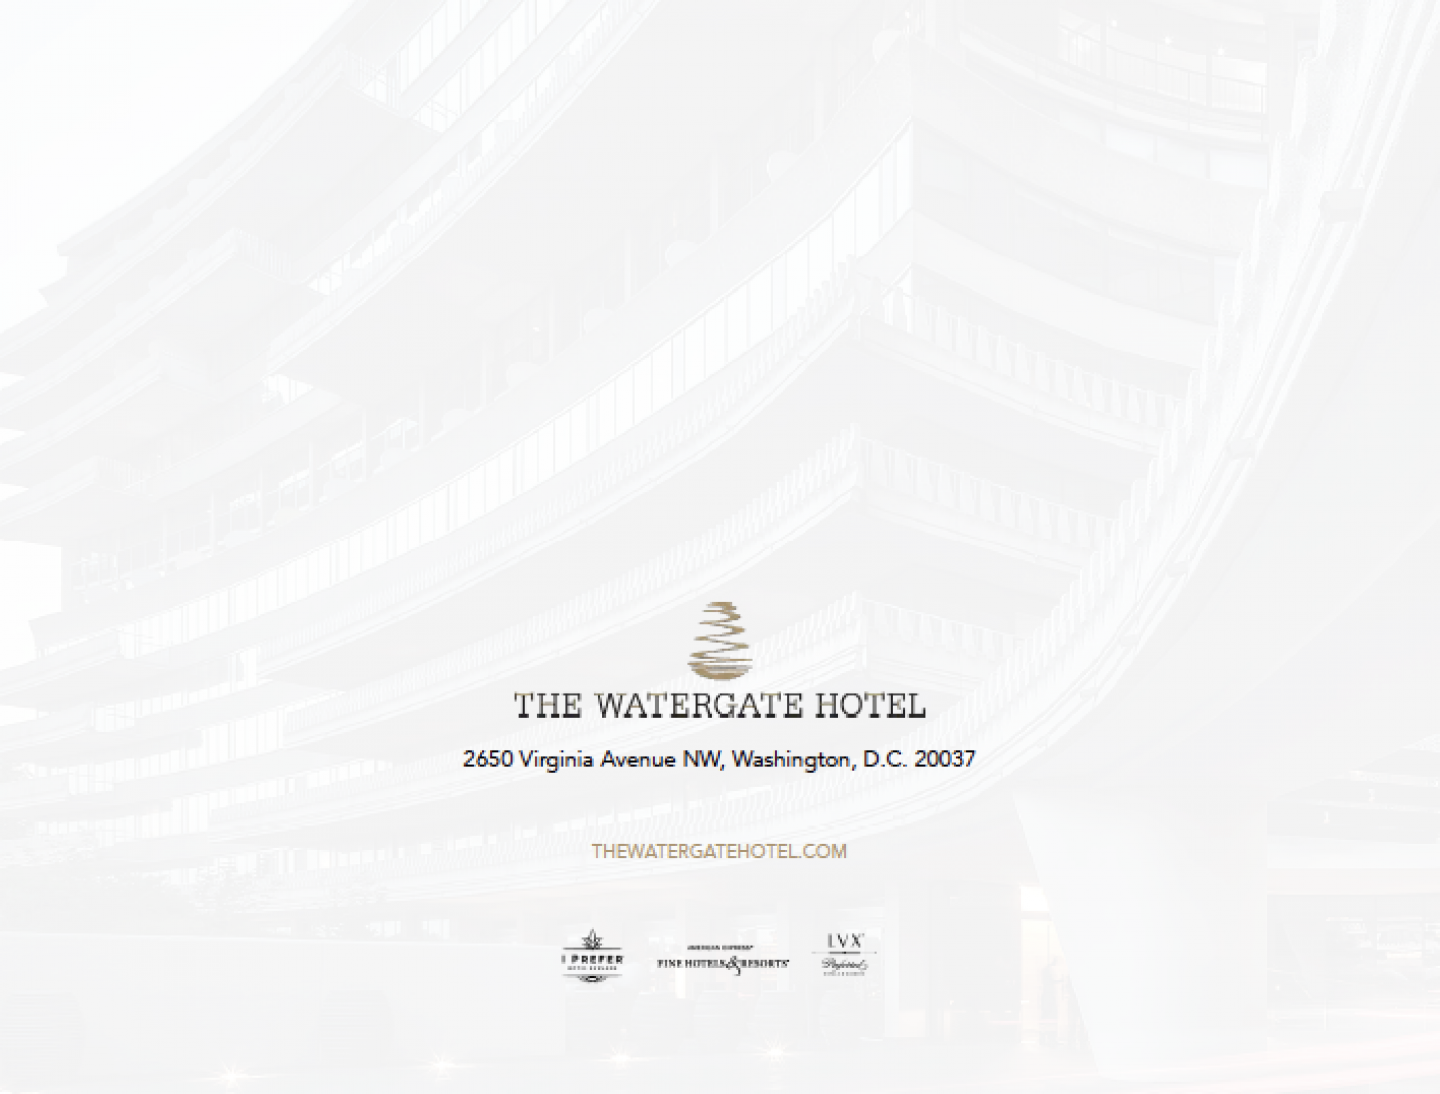 Spa argentta - The watergate hotel